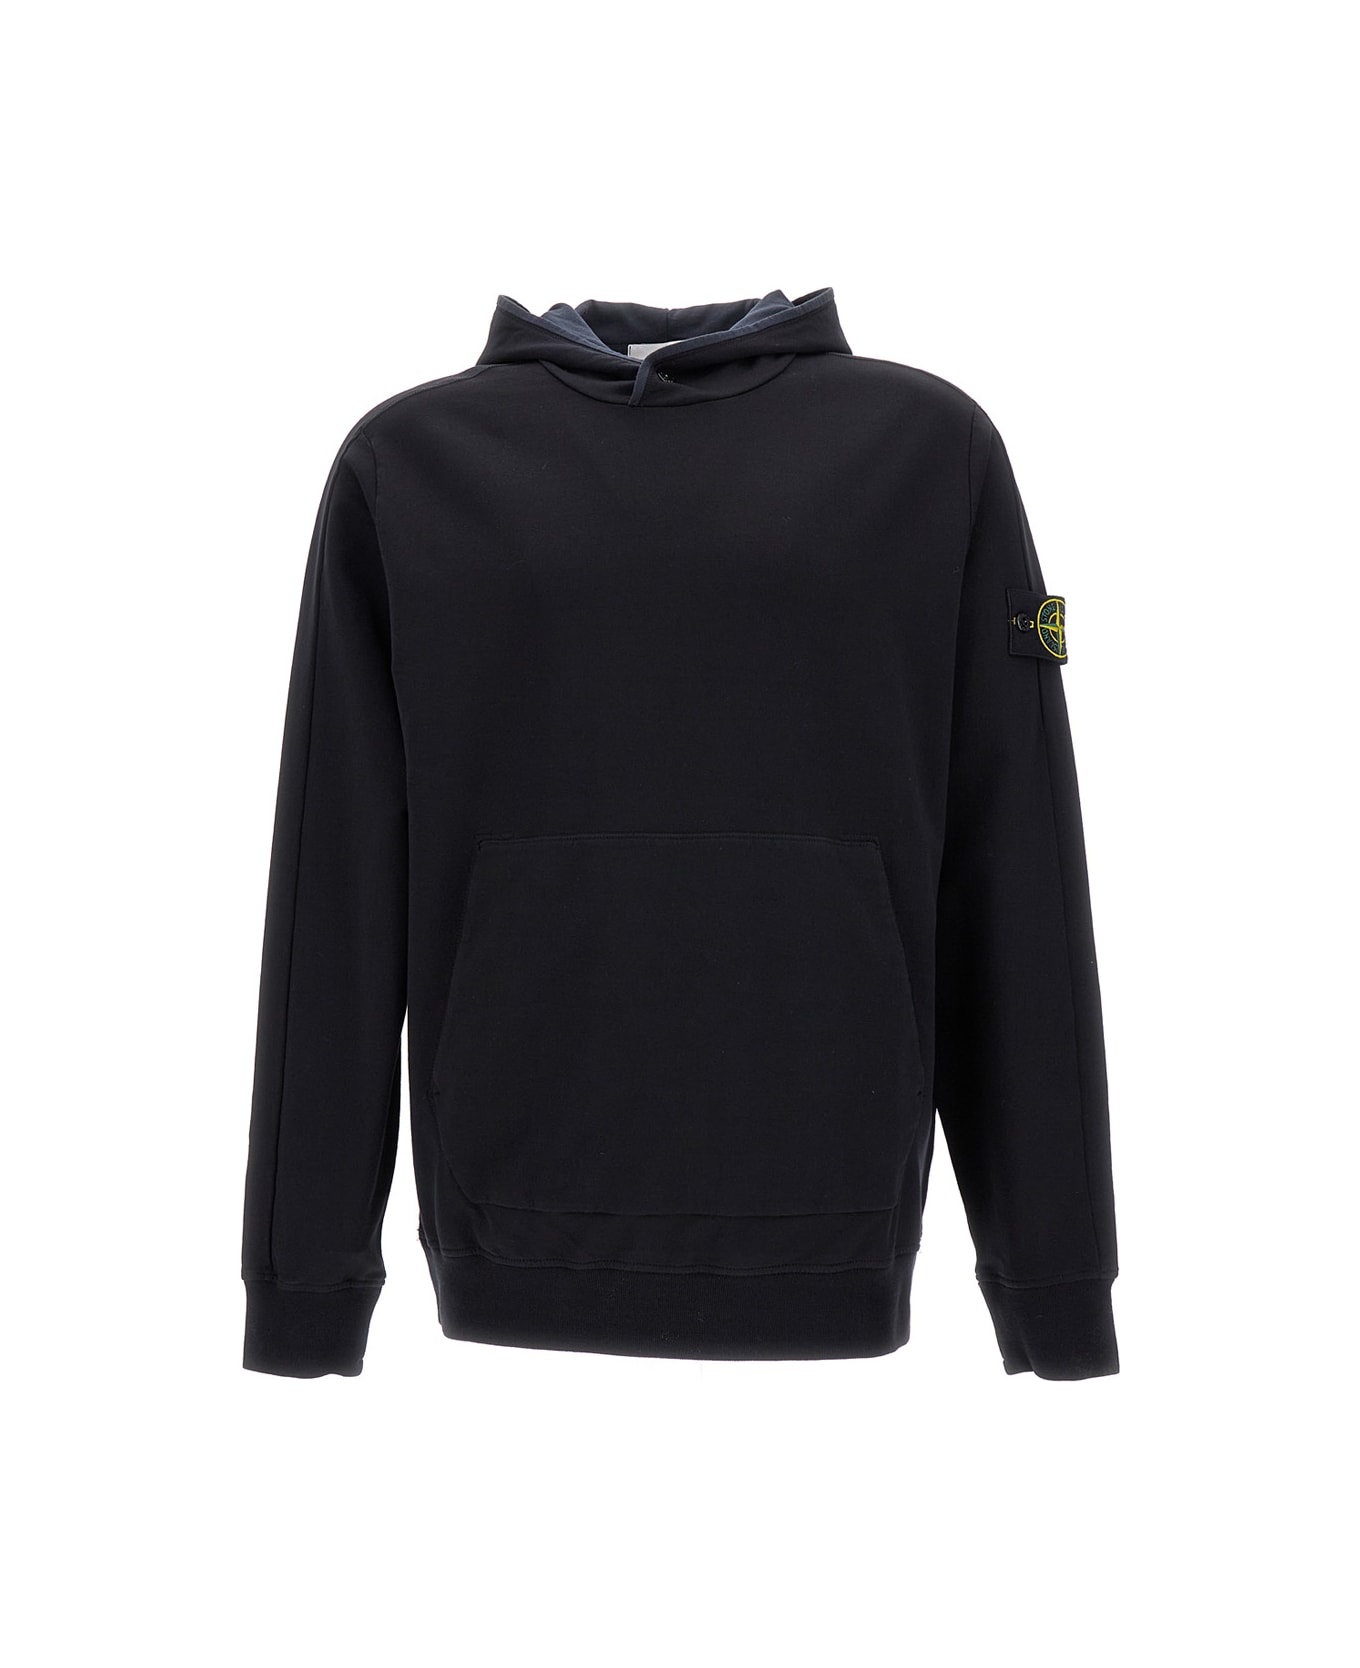 Stone Island Black Hooded Sweatshirt With Logo Application On Sleeve In Cotton Blend Man - Black